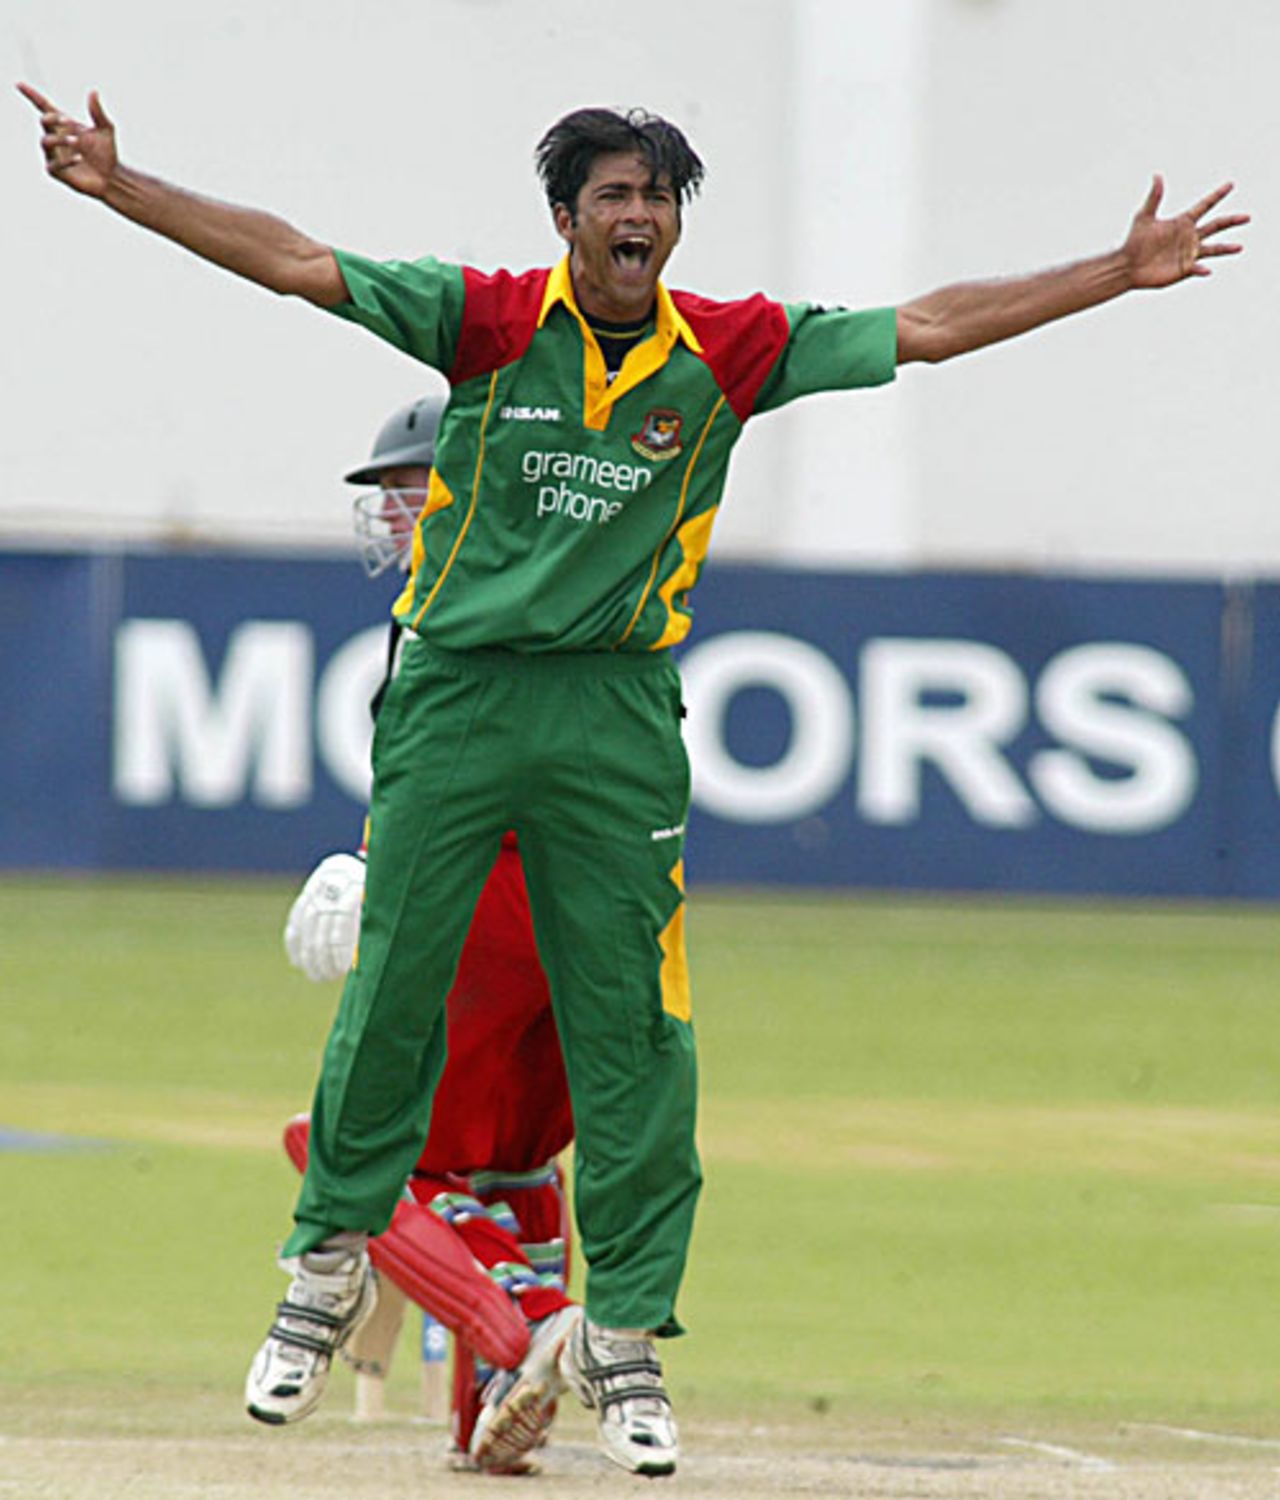 Shahadat Hossain roars an appeal during Zimbabwe's innings, Zimbabwe v Bangladesh, 4th ODI, Harare, February 10, 2007